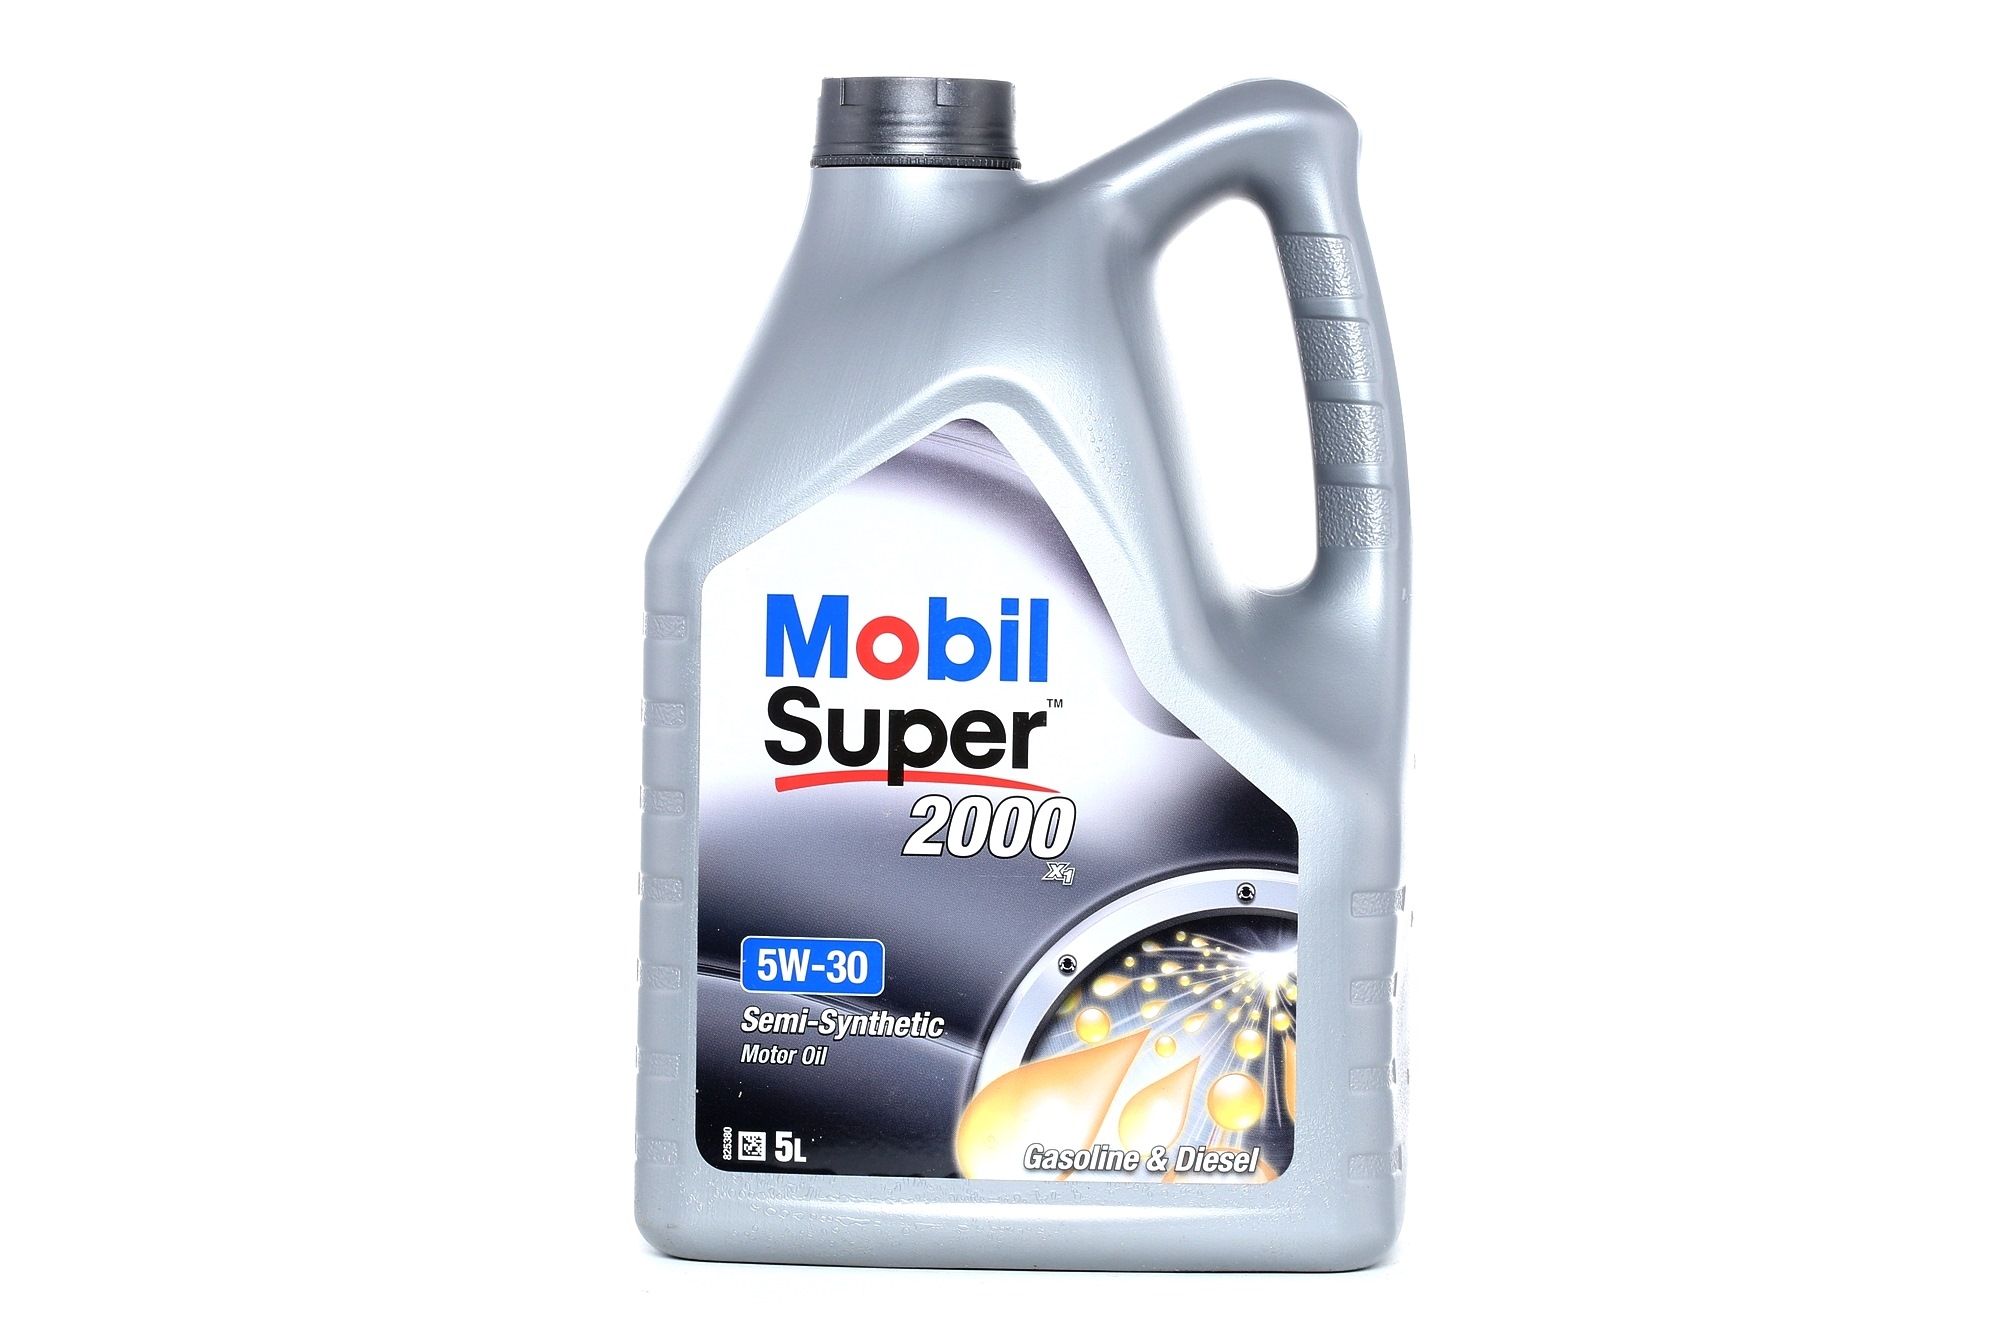 APICF MOBIL Super, 2000 X1 5W-30, 5l, Teilsynthetiköl Motoröl 153536 günstig kaufen